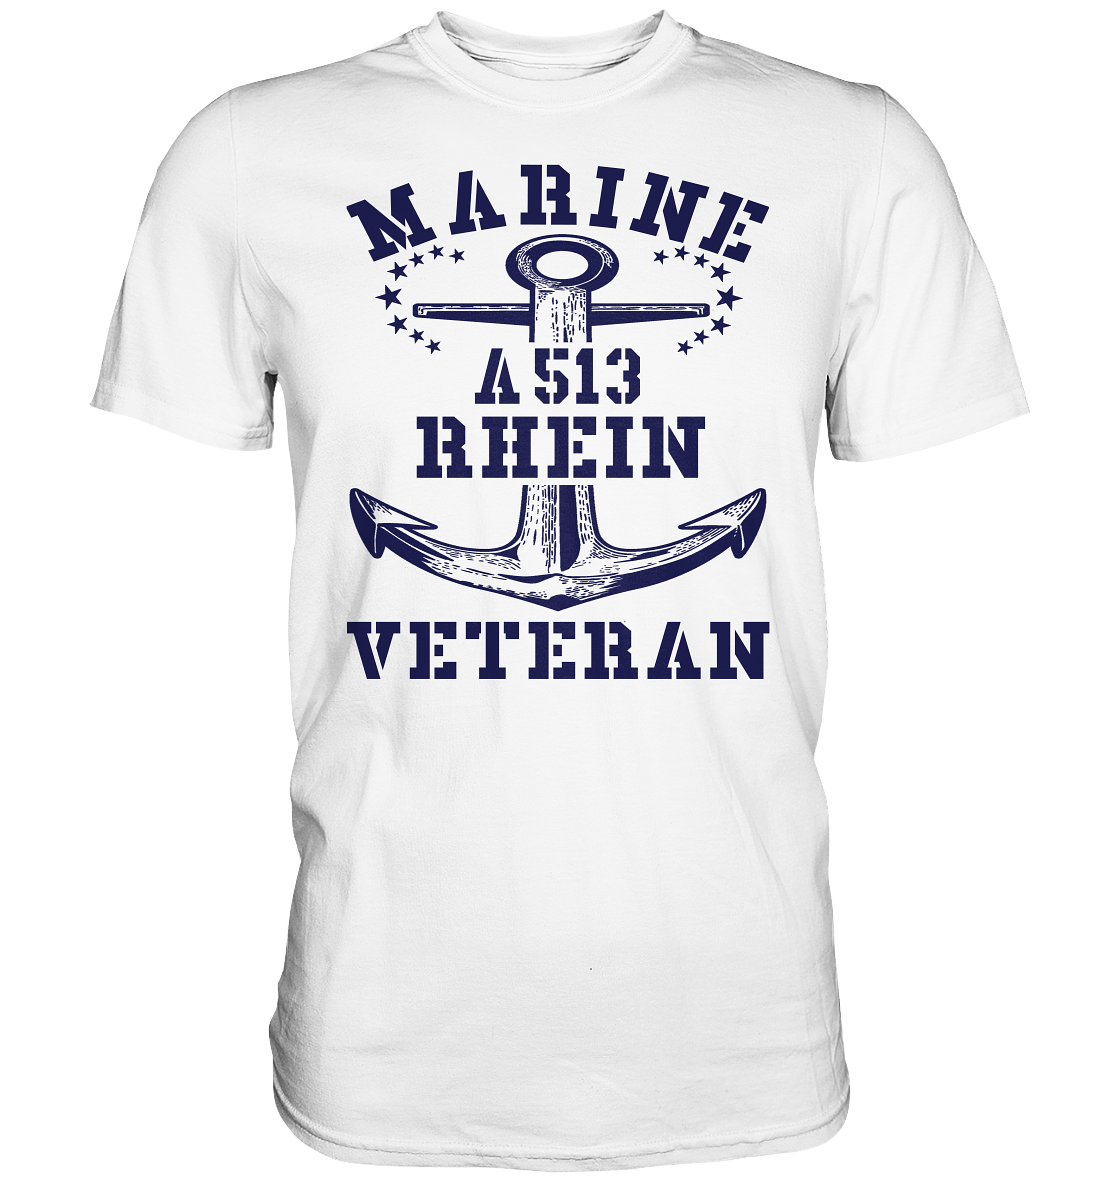 Tender A513 RHEIN Marine Veteran - Premium Shirt